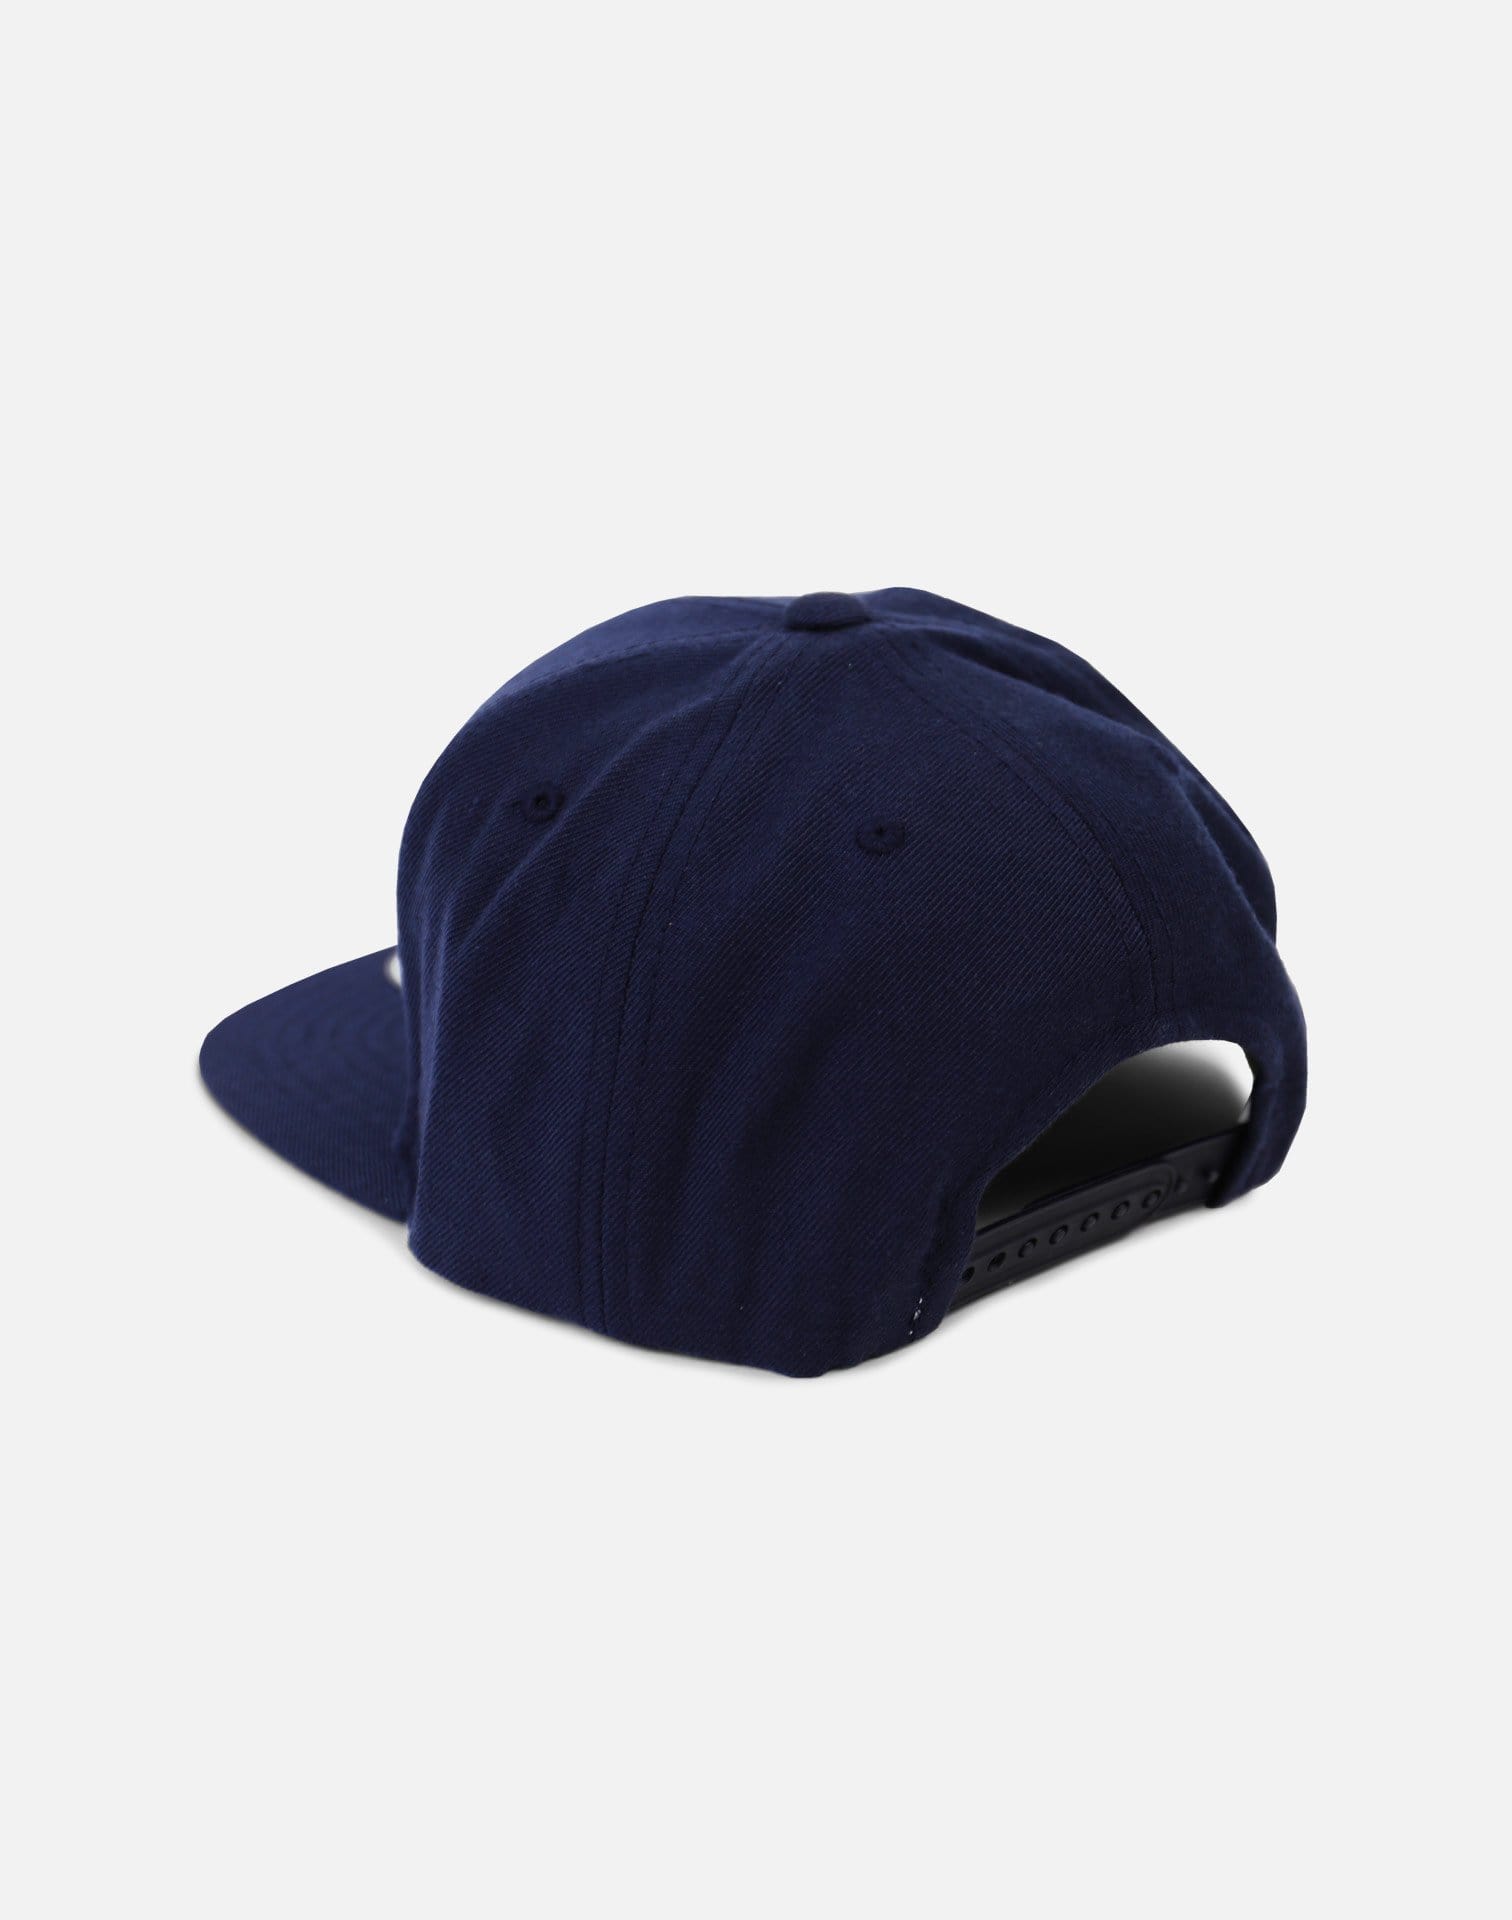 Dallas Cowboys Basic Snapback Hat (Navy)